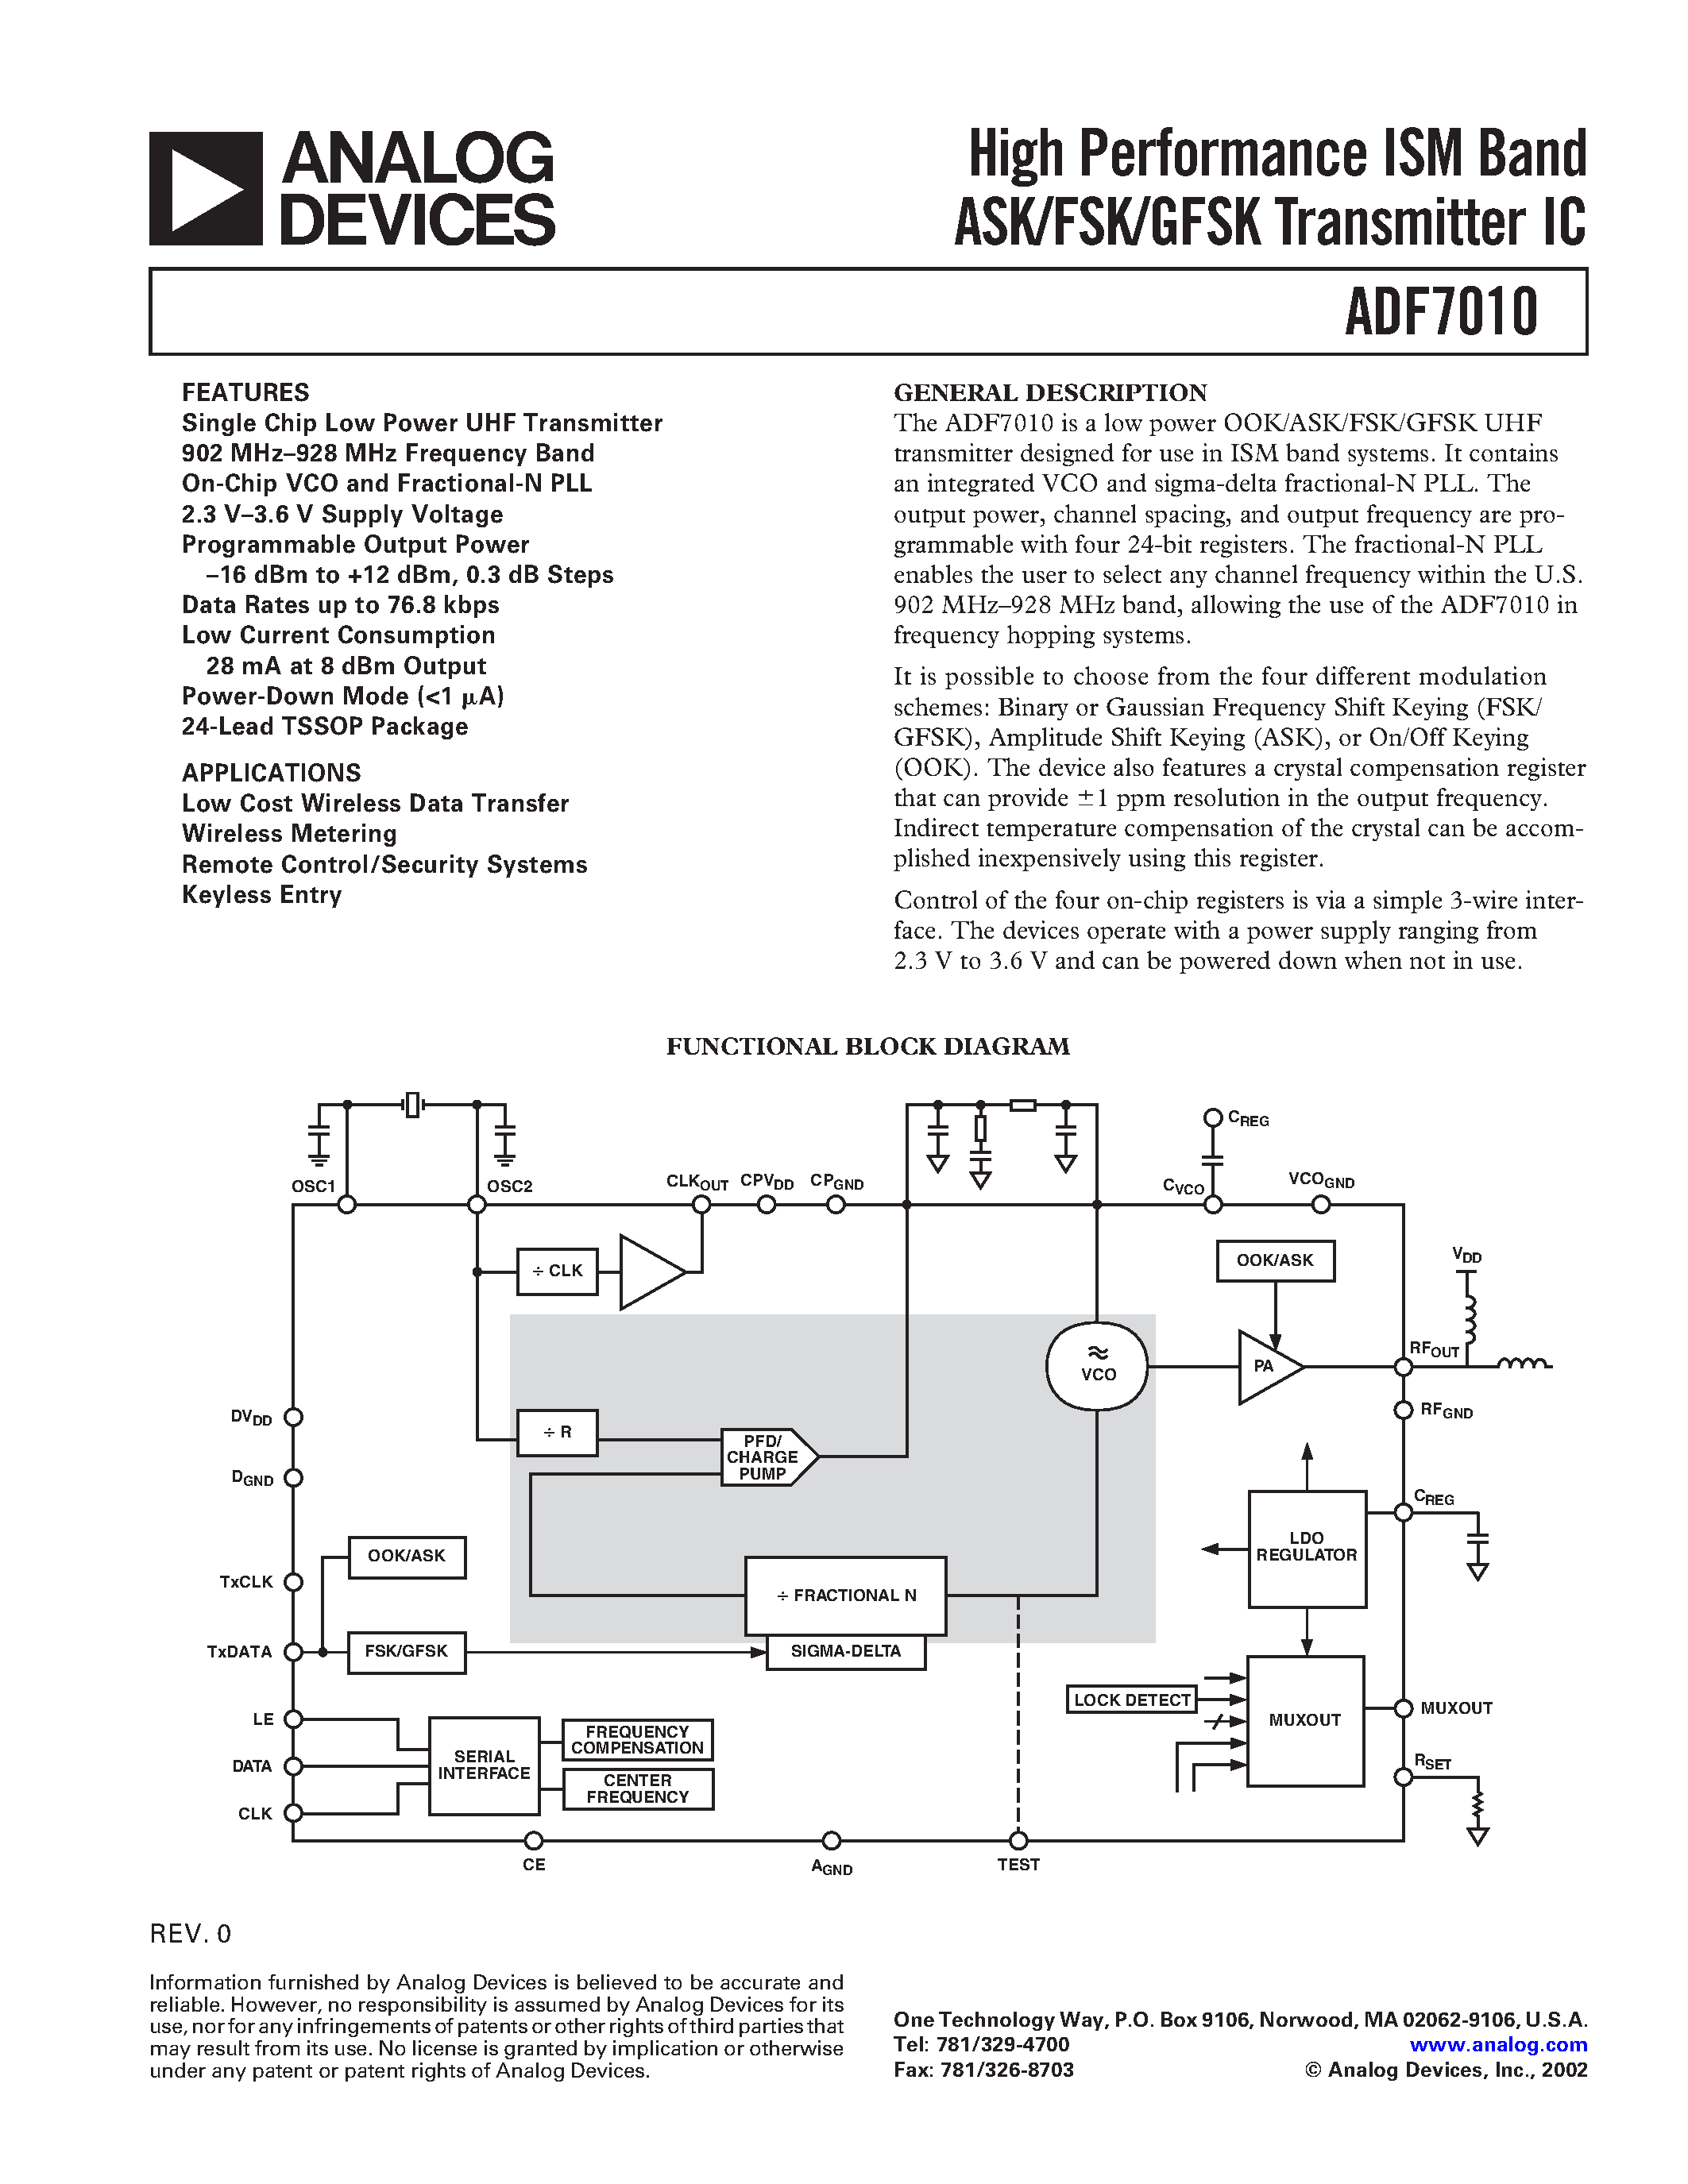 Даташит ADF7010 - High Performance ISM Band ASK/FSK/GFSK Transmitter IC страница 1